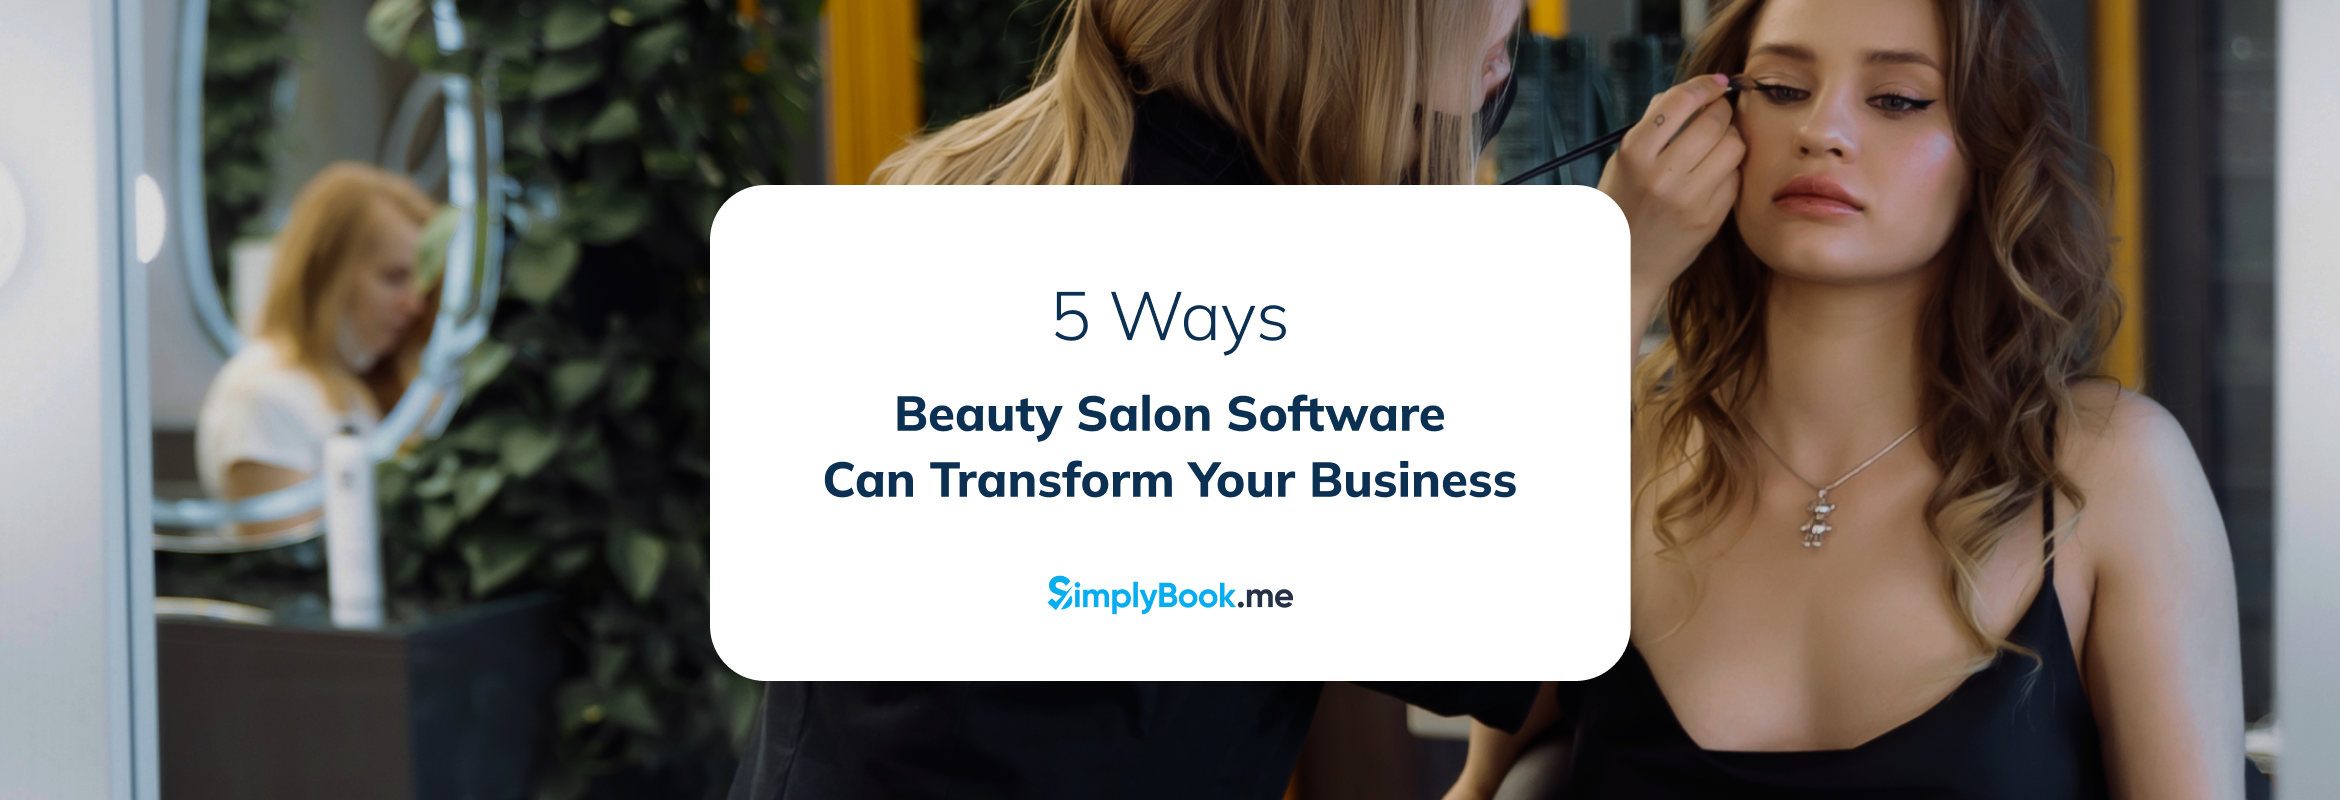 Beauty salon software